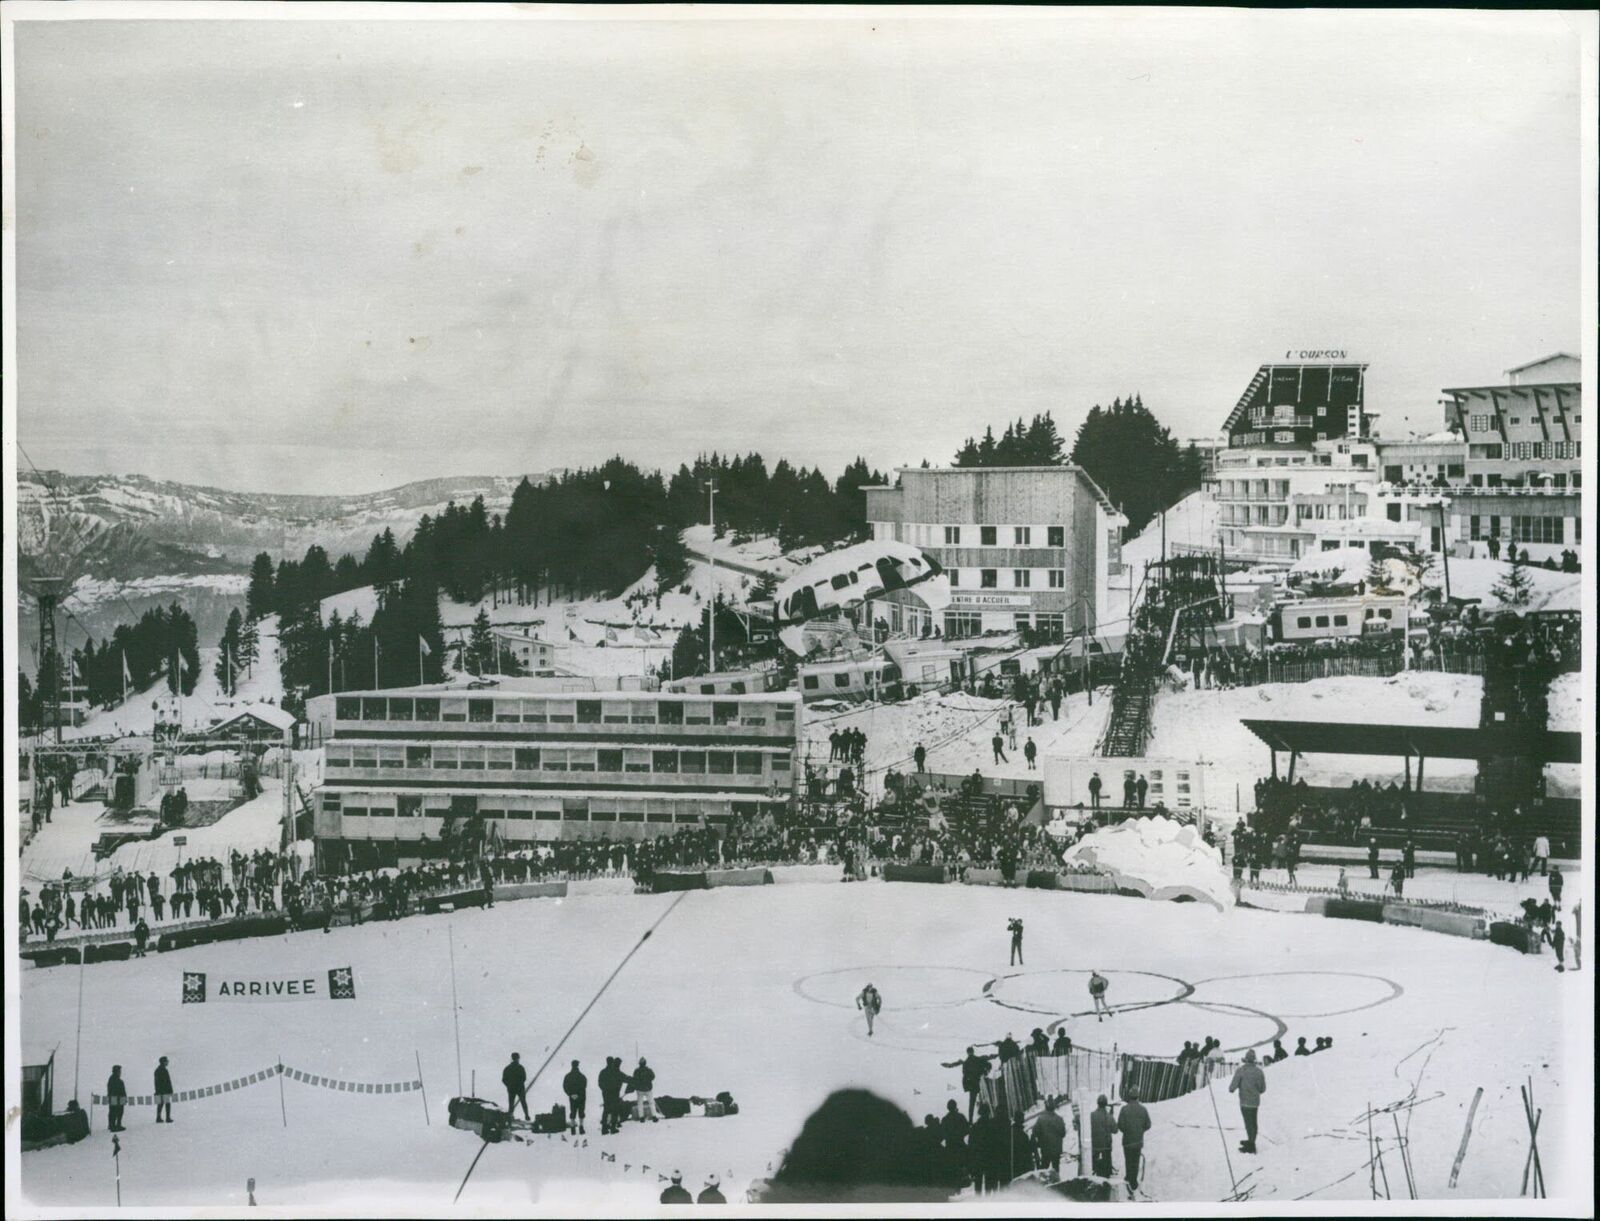 1968 Winter Olympics - Vintage Photograph 3761121